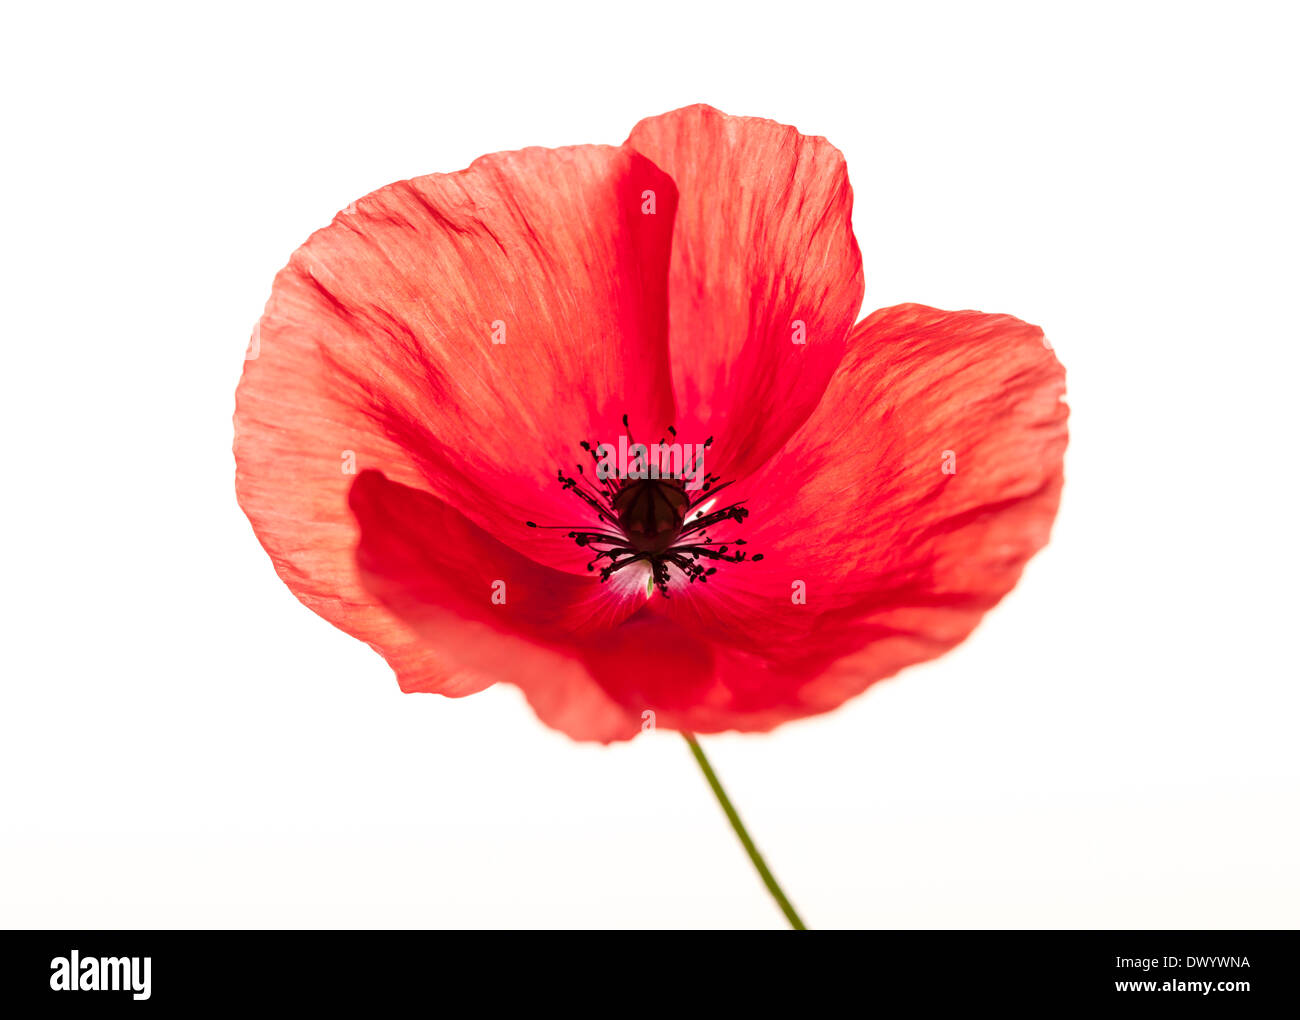 One red poppy flower isolated on white background, studio shot Stock Photo